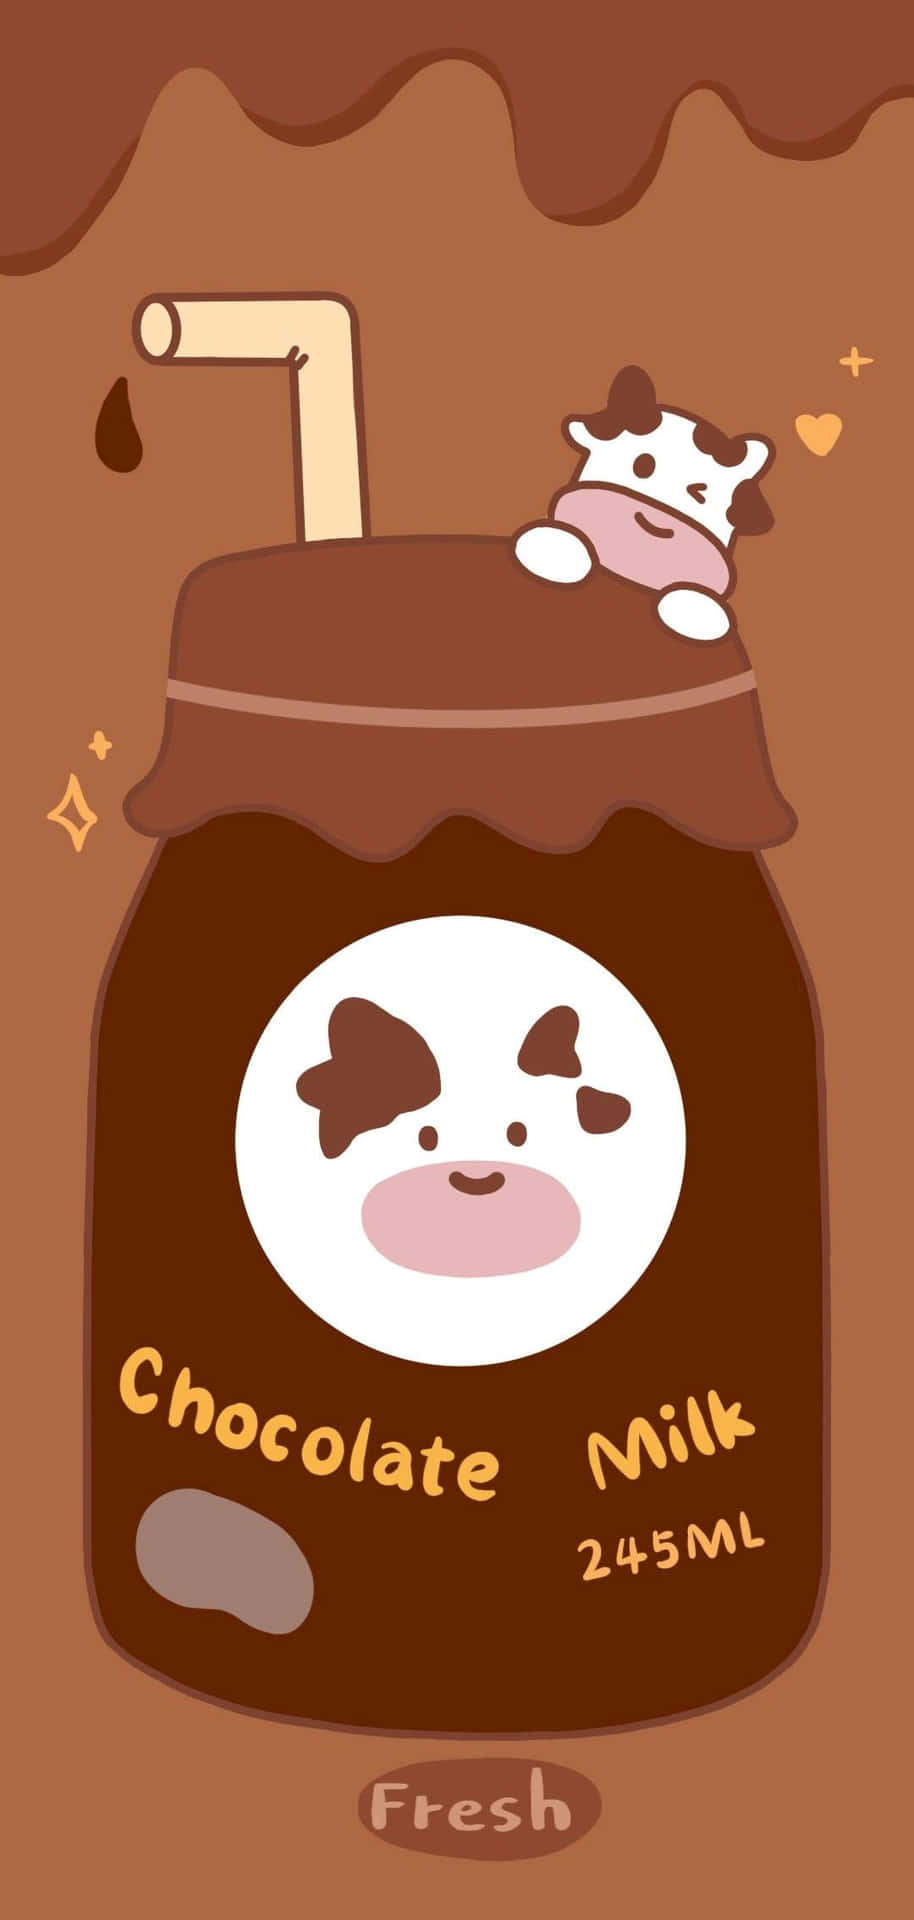 Adorable Kawaii Cute Cow Illustration Wallpaper